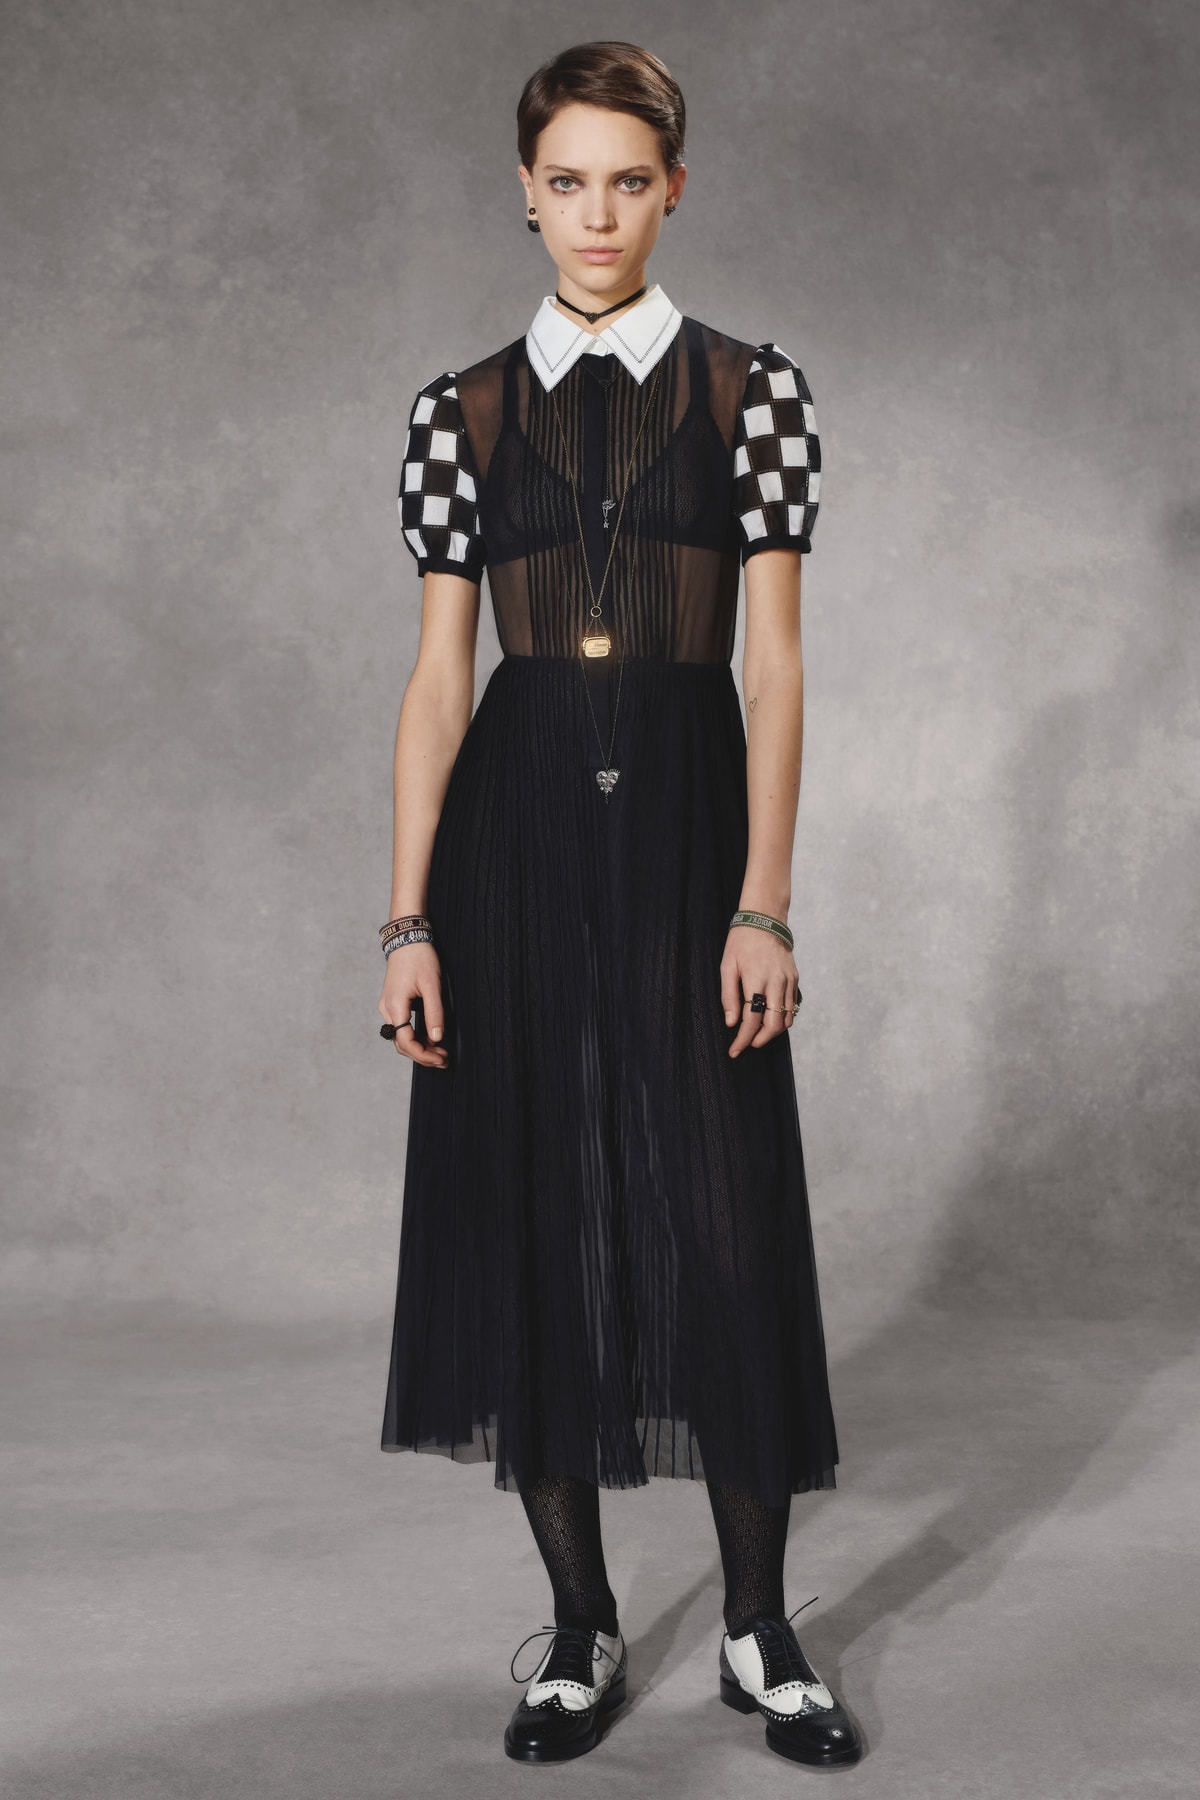 Dior Fall 2018 Collection Lookbook Sheer Dress Black